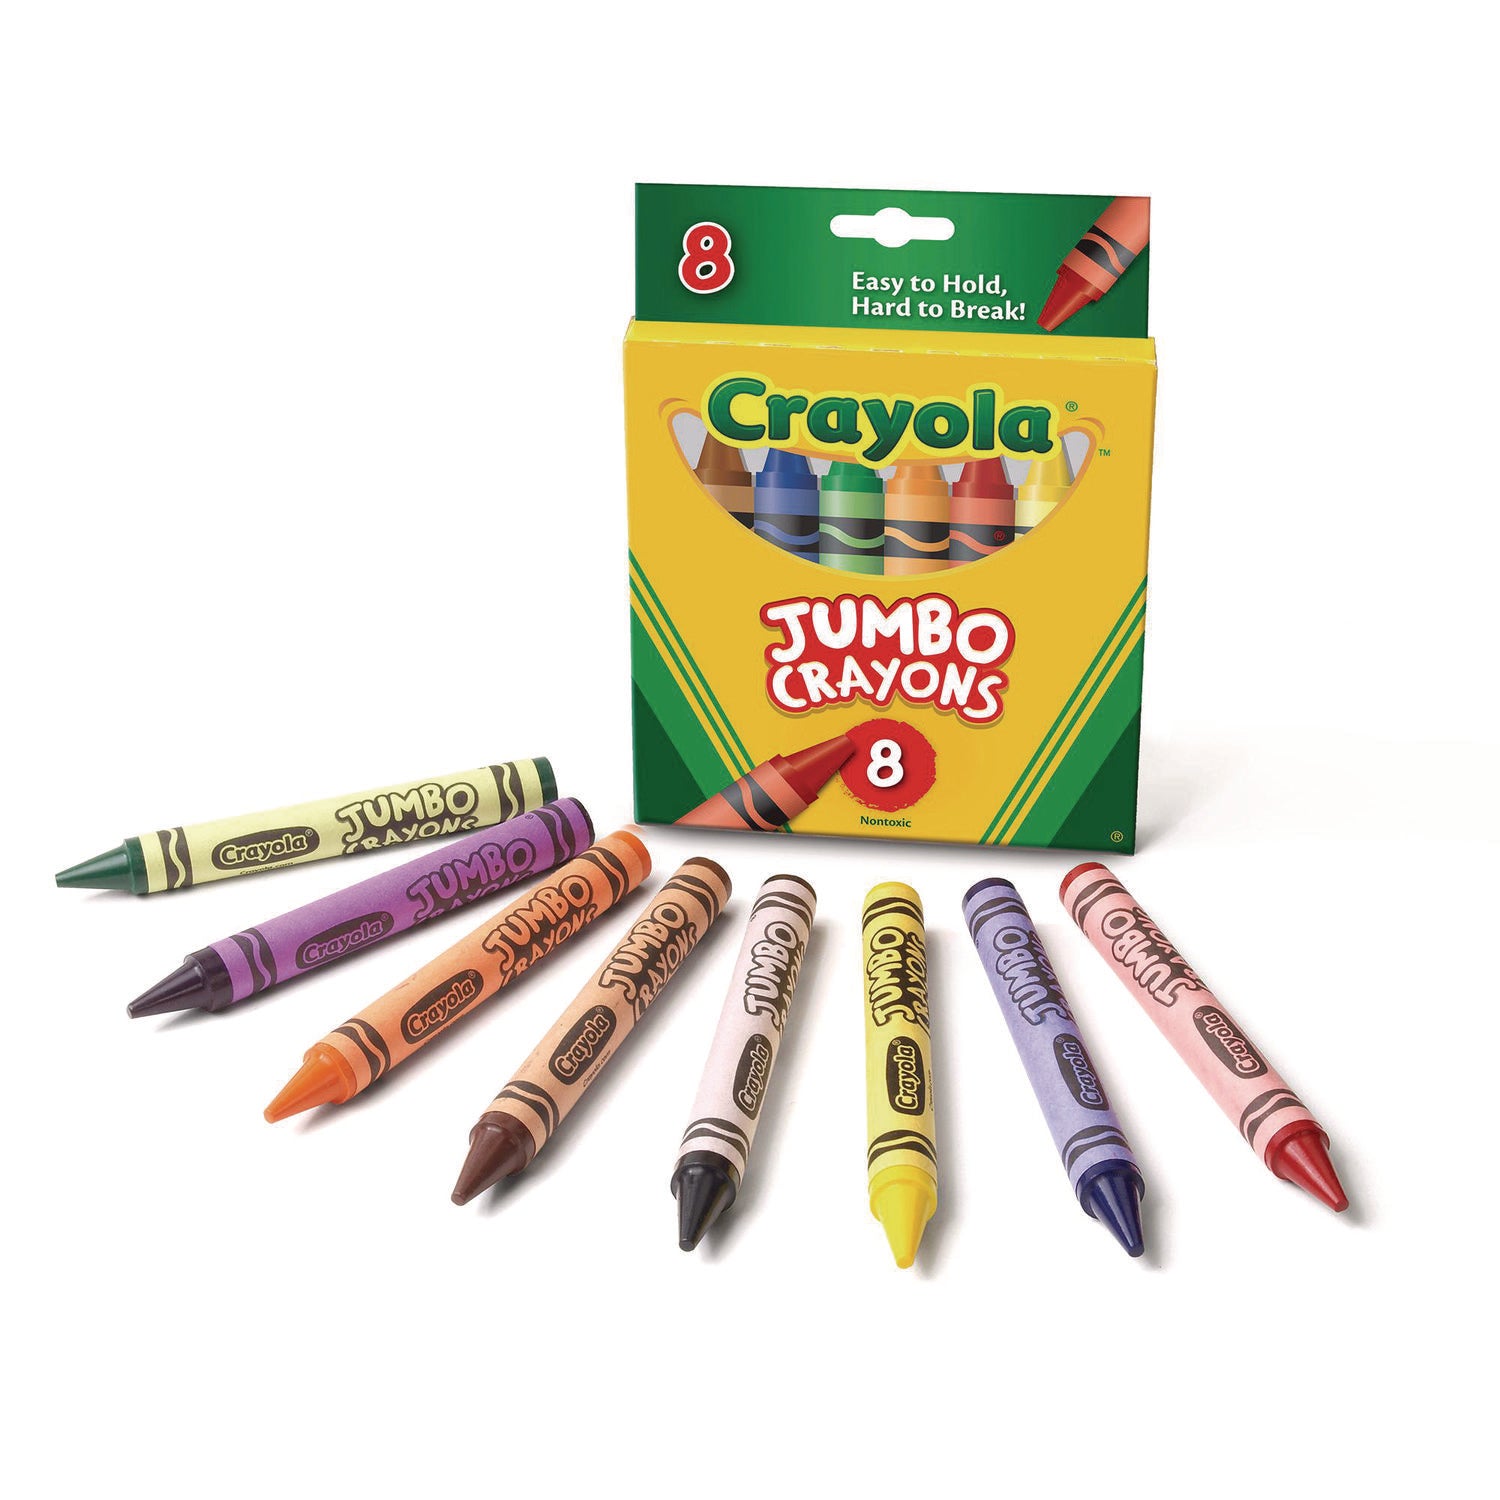 Jumbo Crayons, Assorted Colors, 8/Box - 2